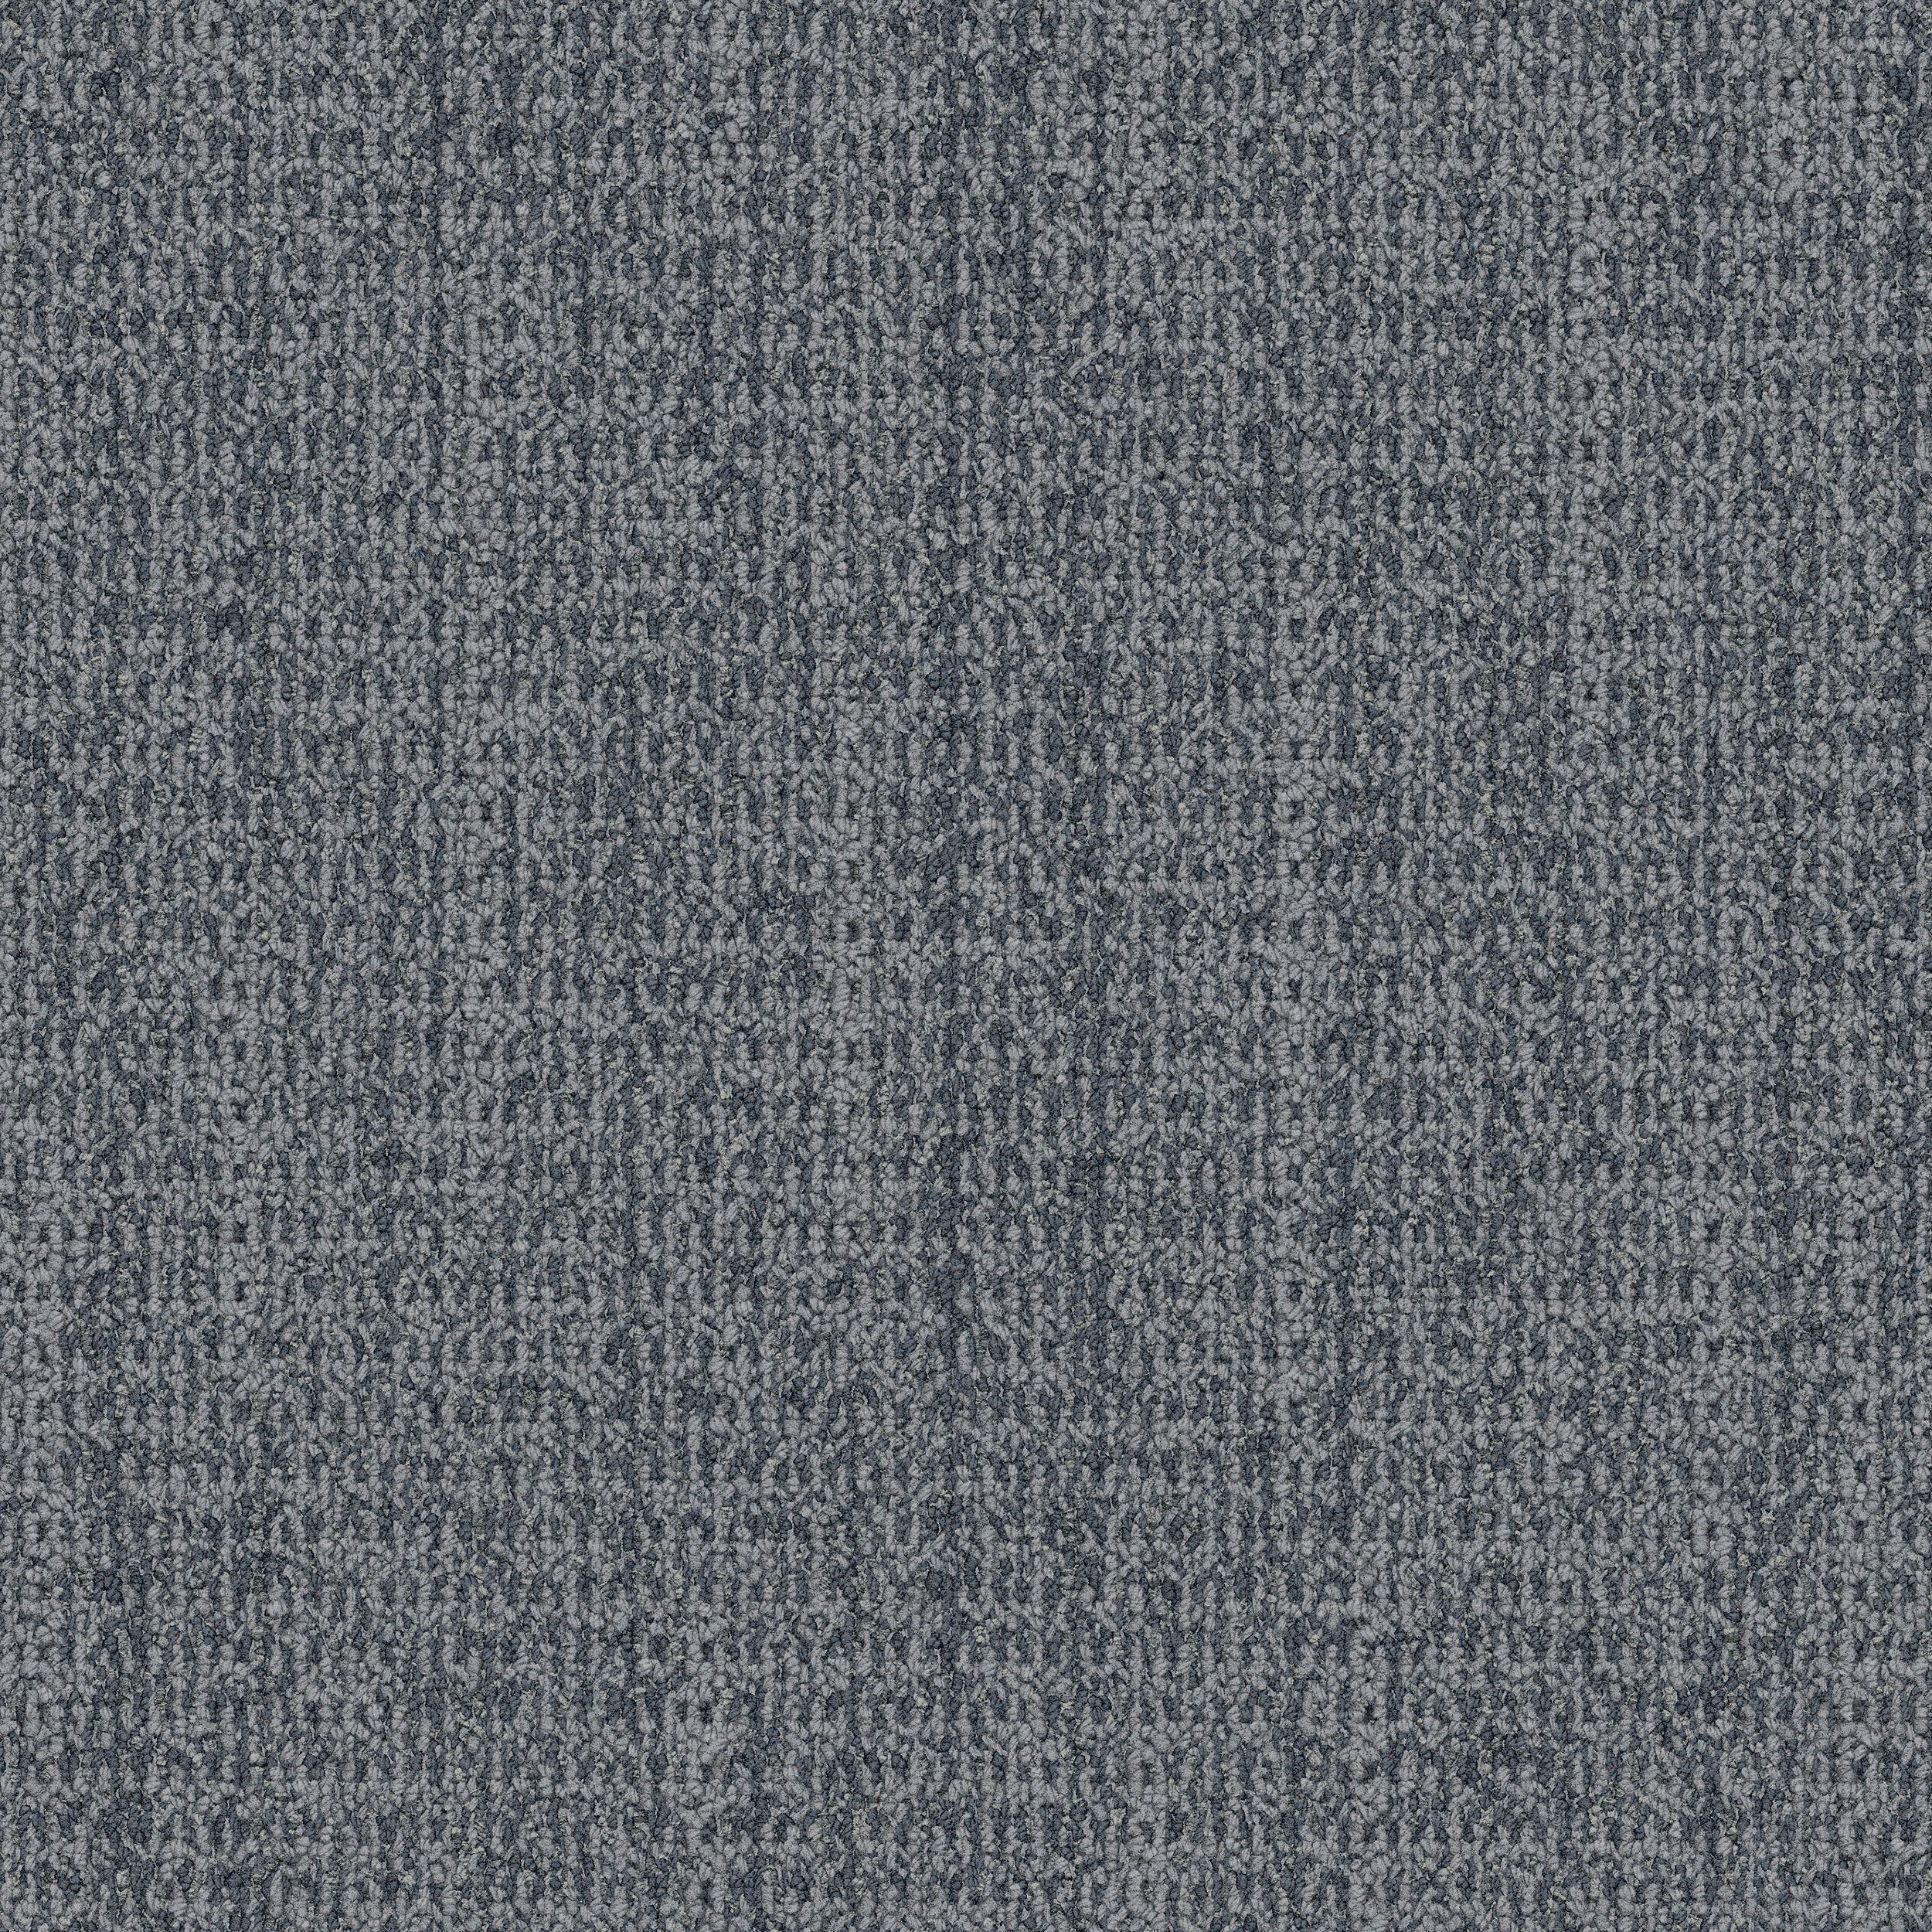 WG100 Carpet Tile In Charcoal número de imagen 1